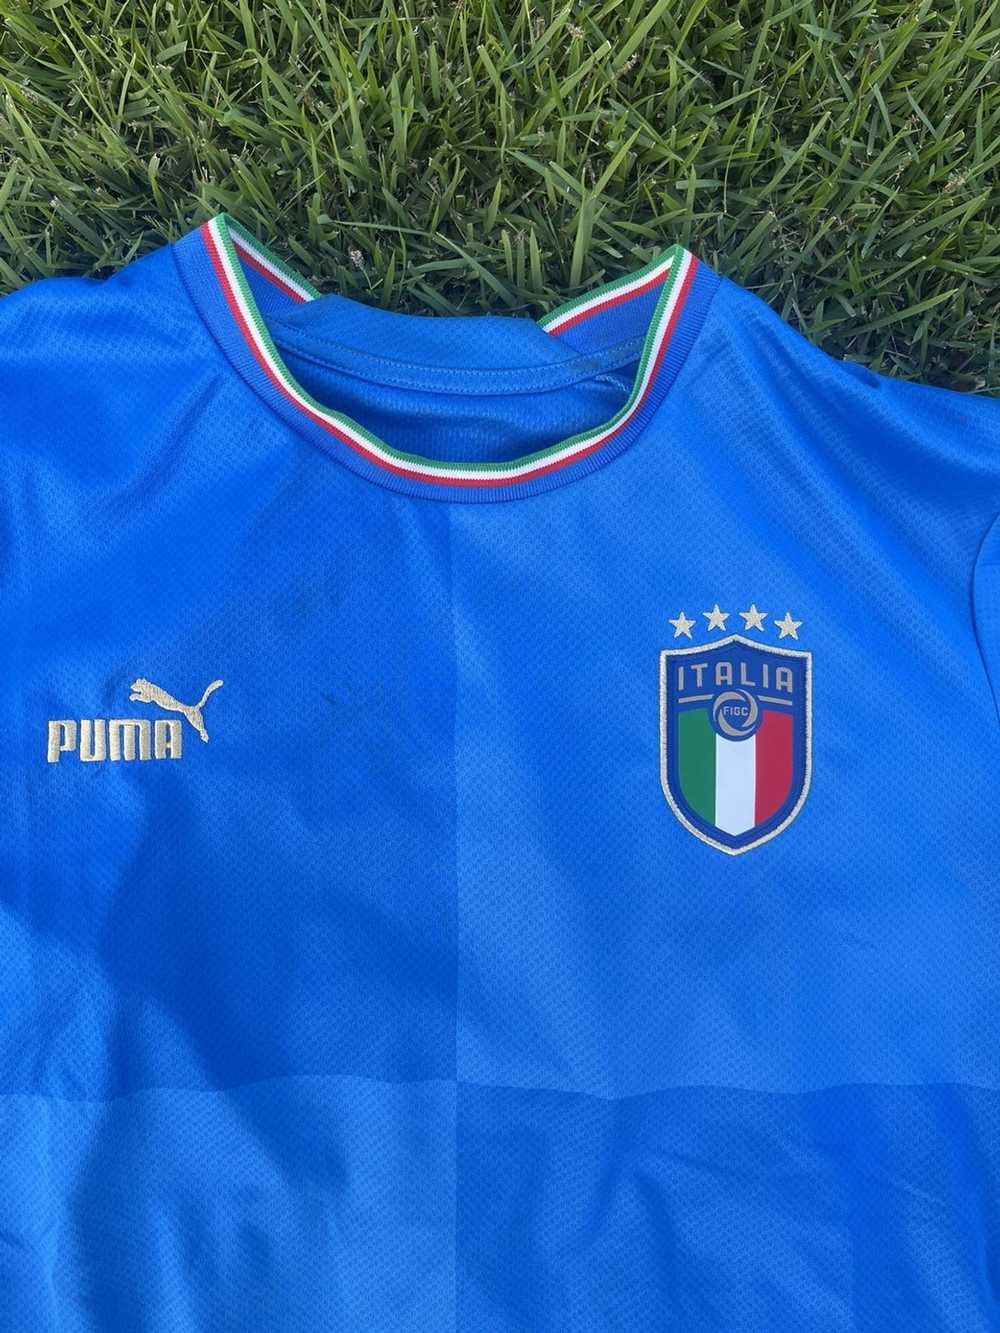 Puma Italy Home Jersey 2022/23 - image 2